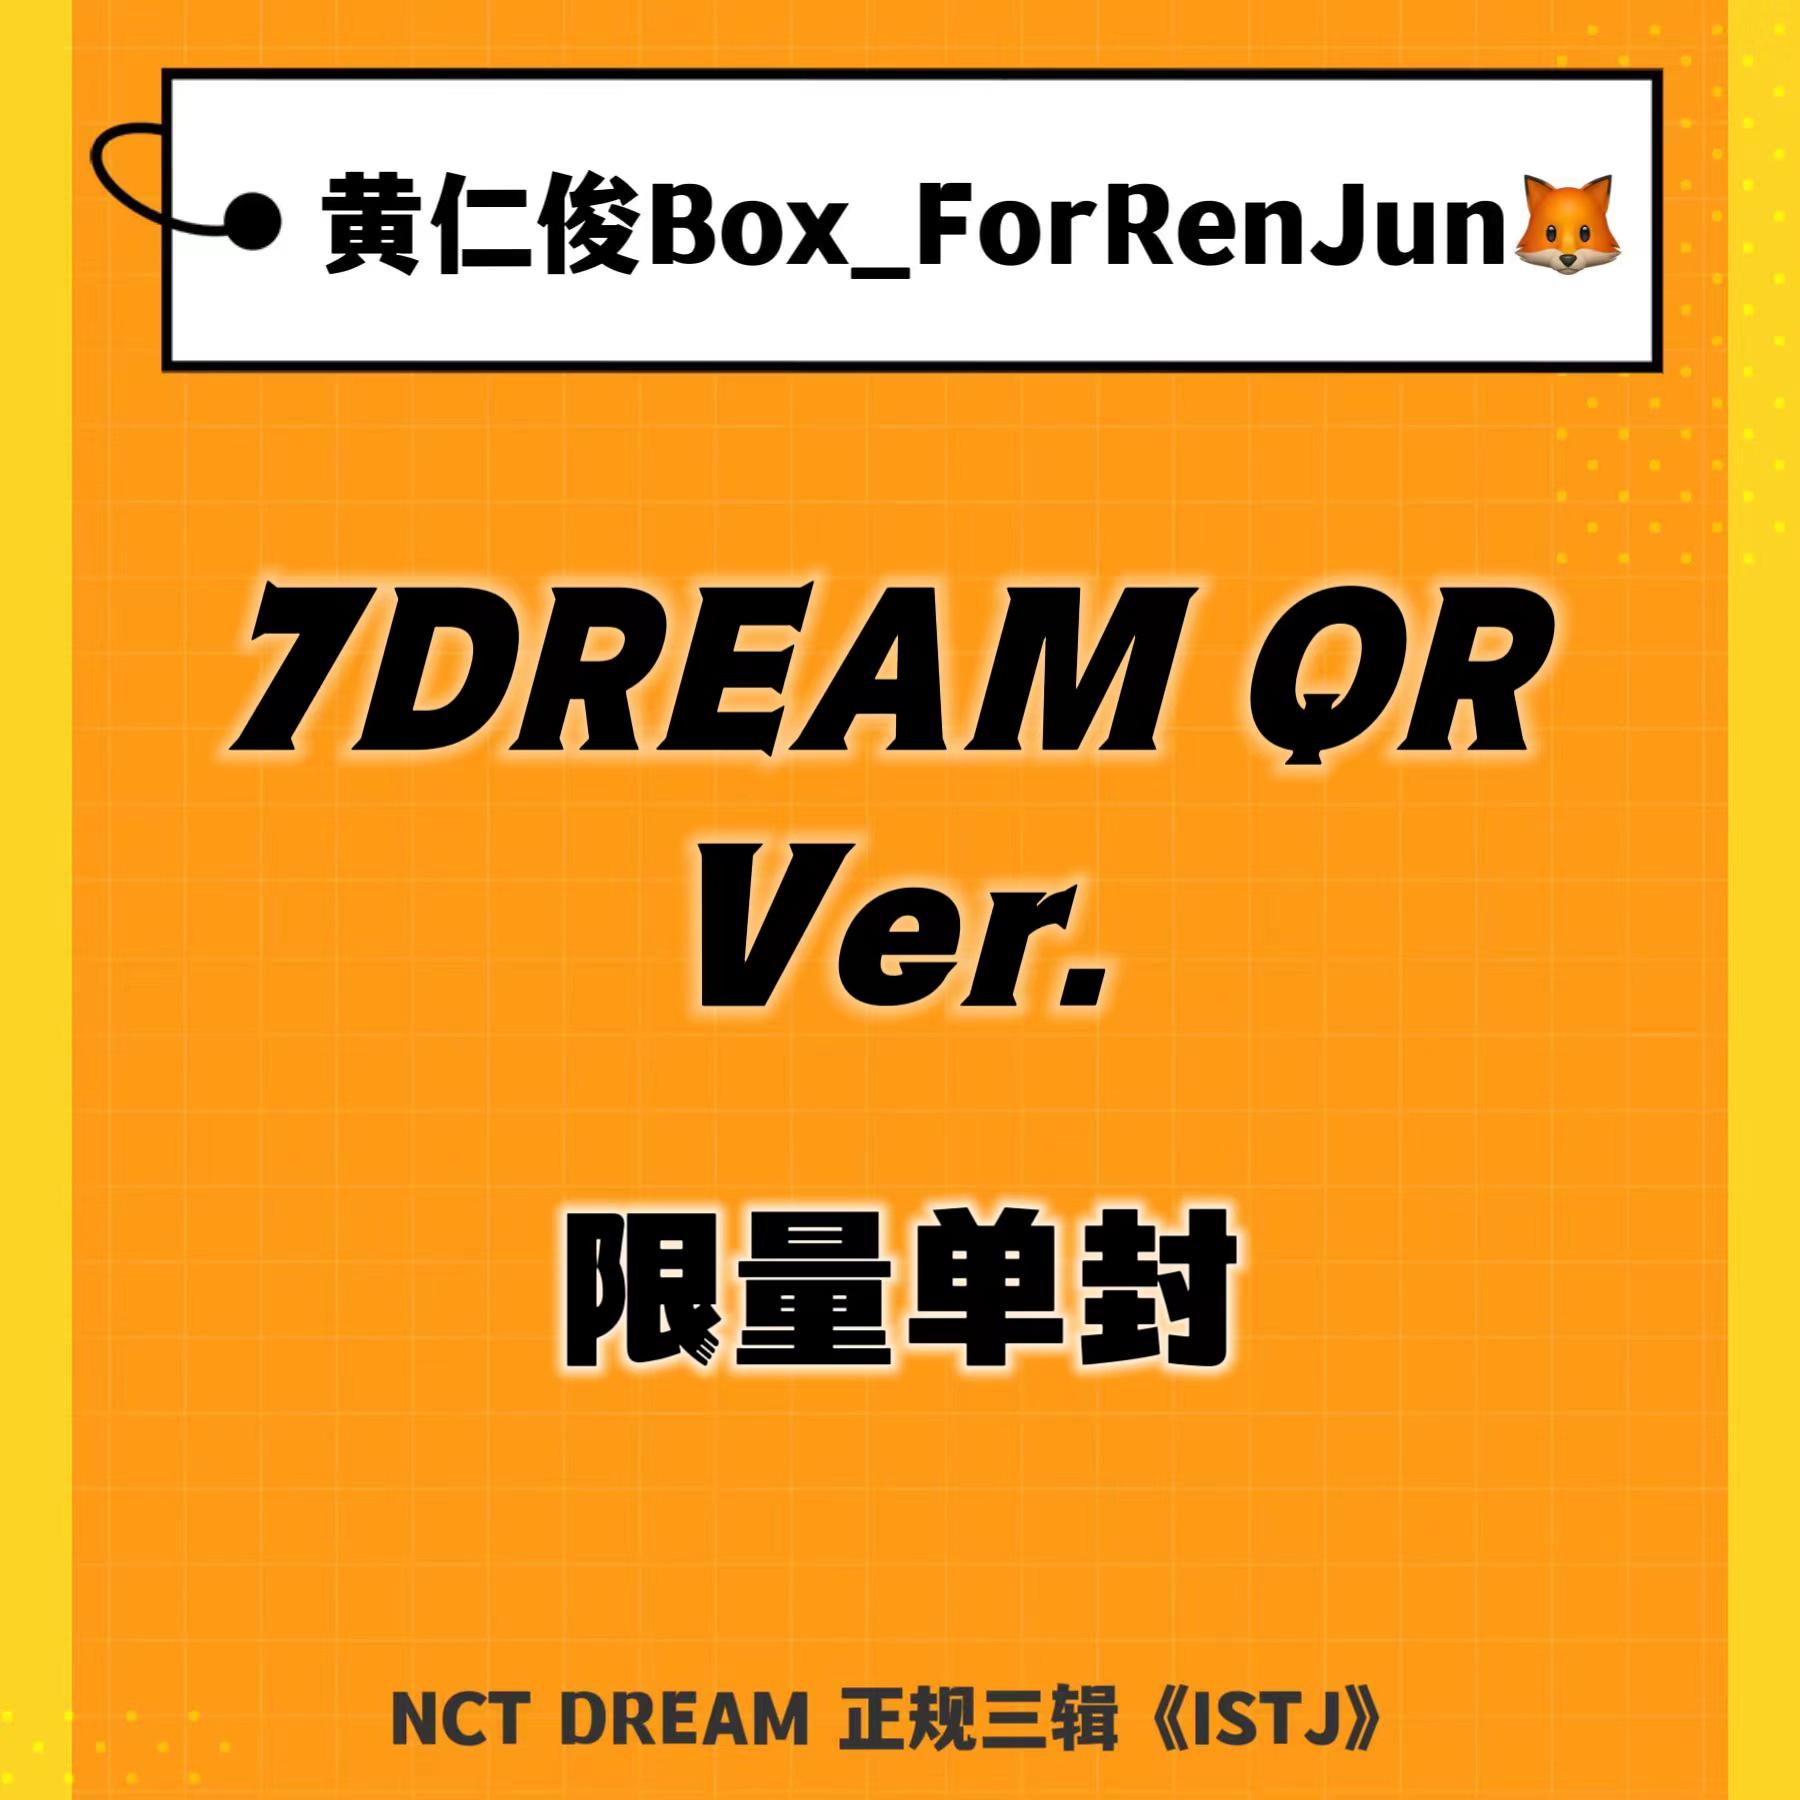 【七站联合】NCT DREAM - 正规3辑 [ISTJ] (7DREAM QR Ver.) (Smart Album) (随机版本)_黄仁俊吧RenJunBar